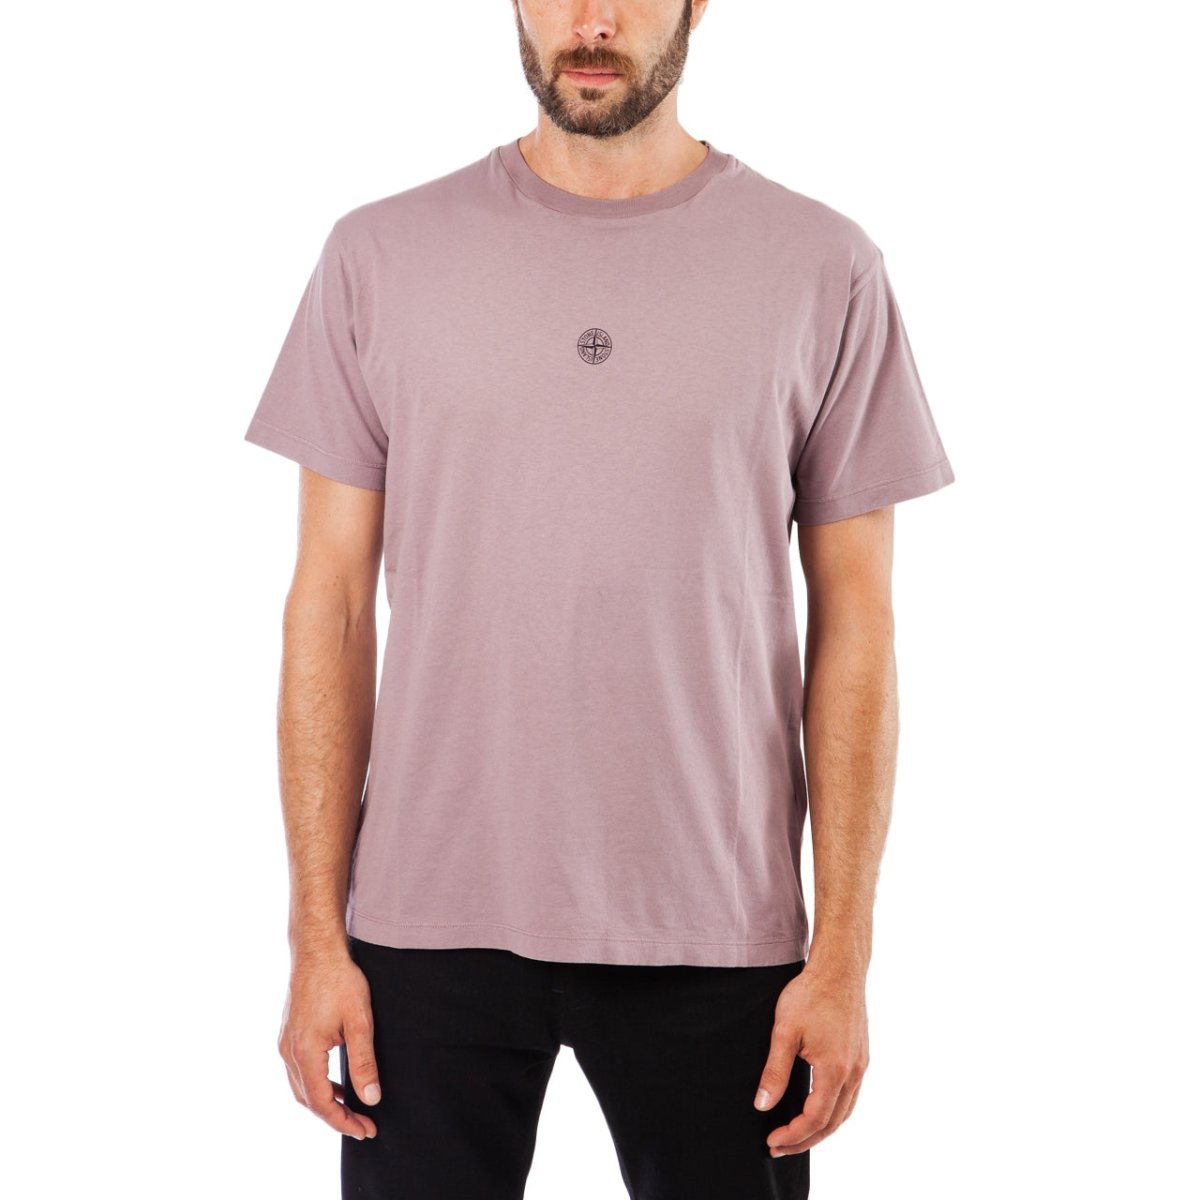 Stone Island T-Shirt (Rosa)  - Allike Store